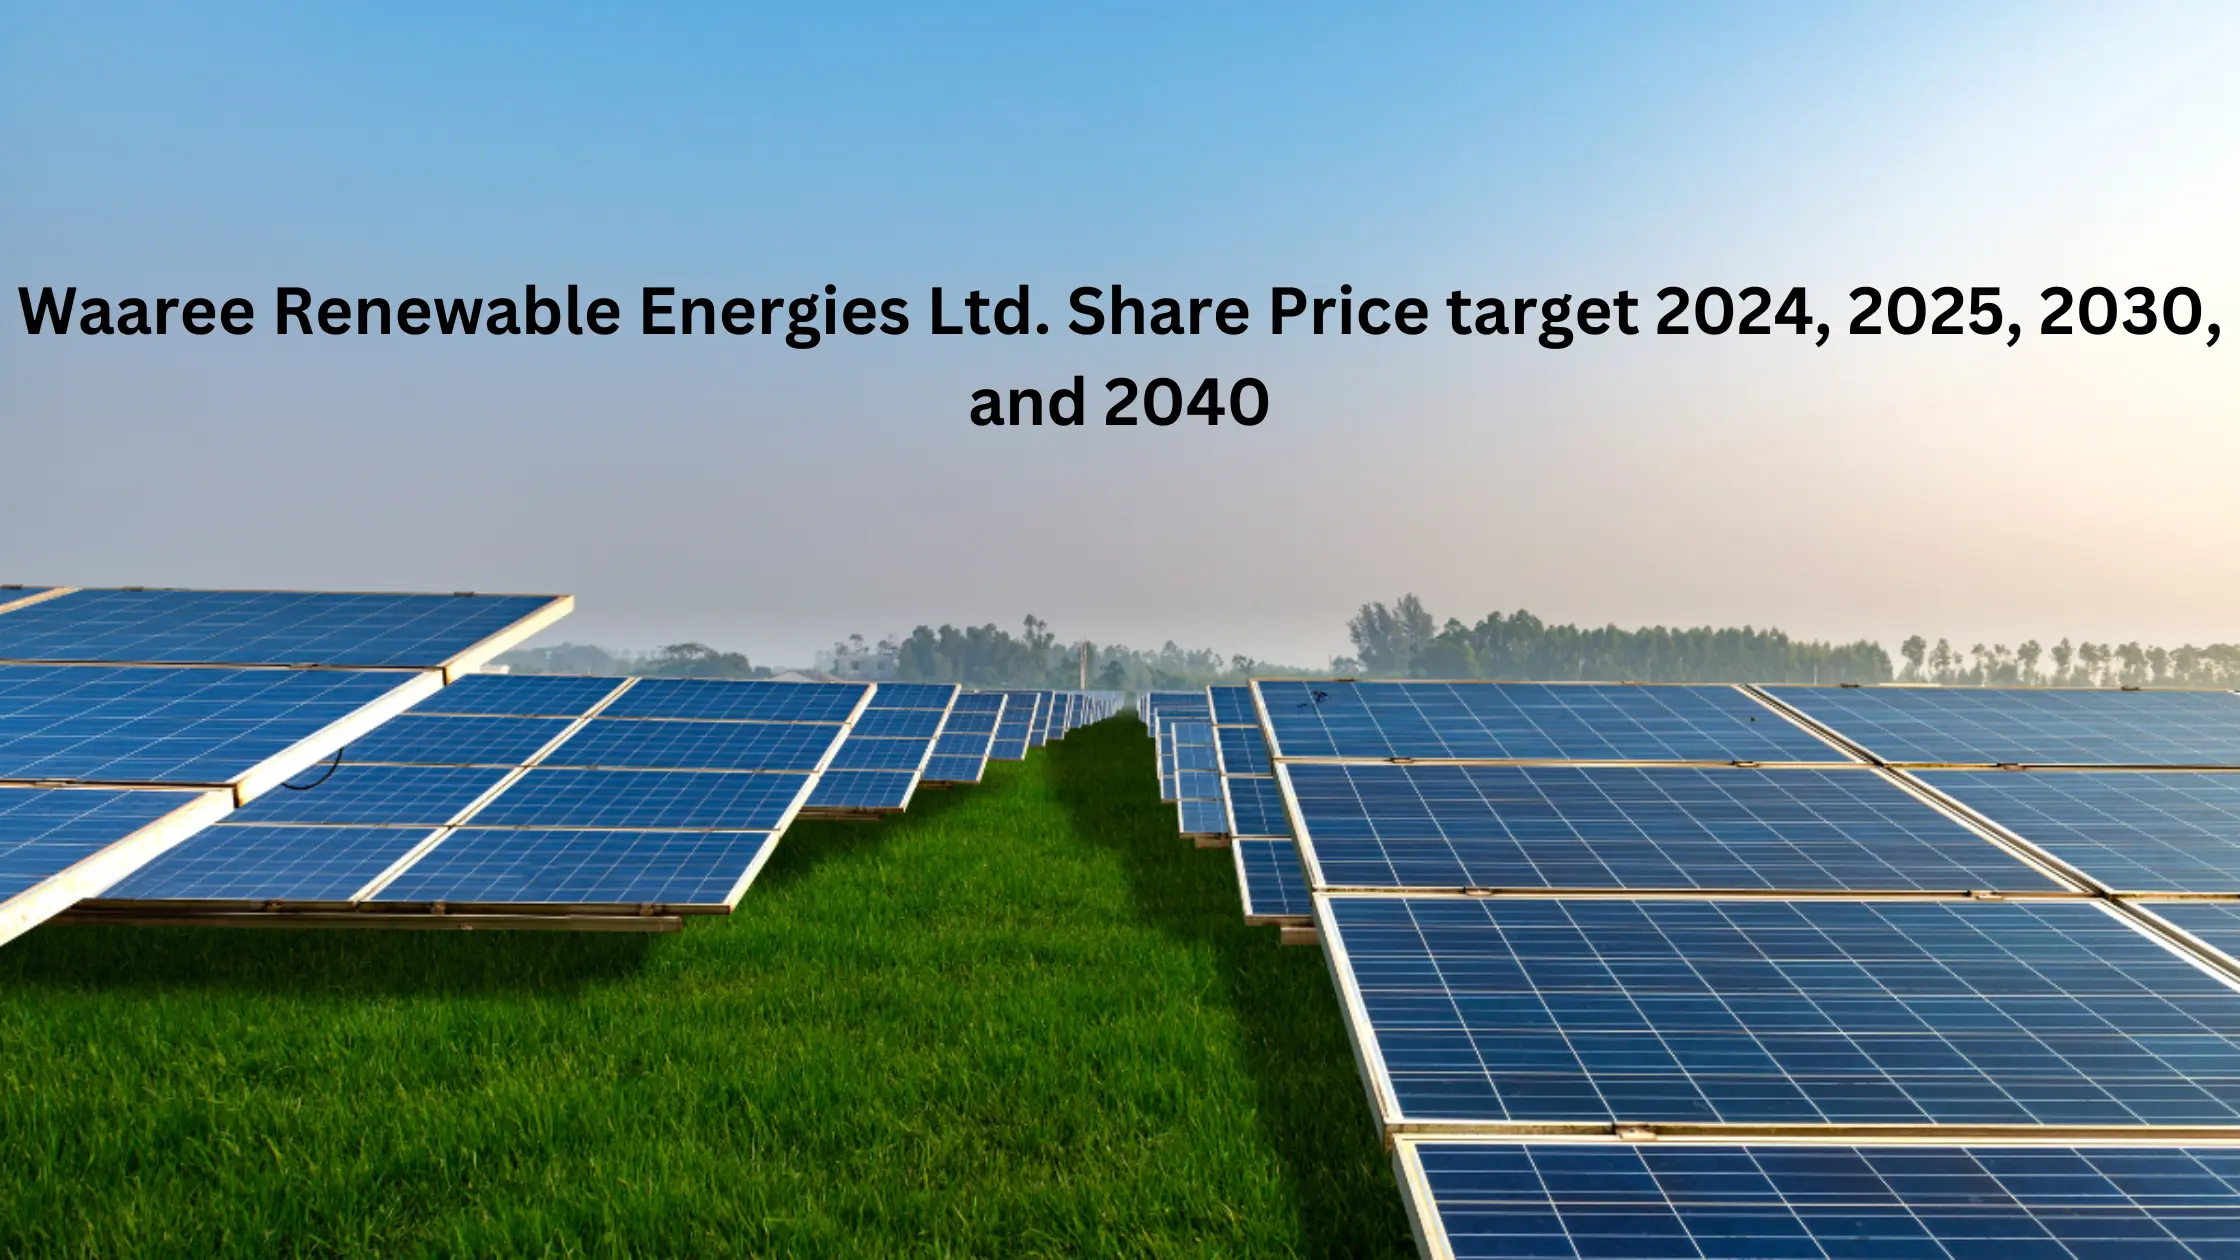 waaree renewable share price target 2024, 2025, 2030, and 2040